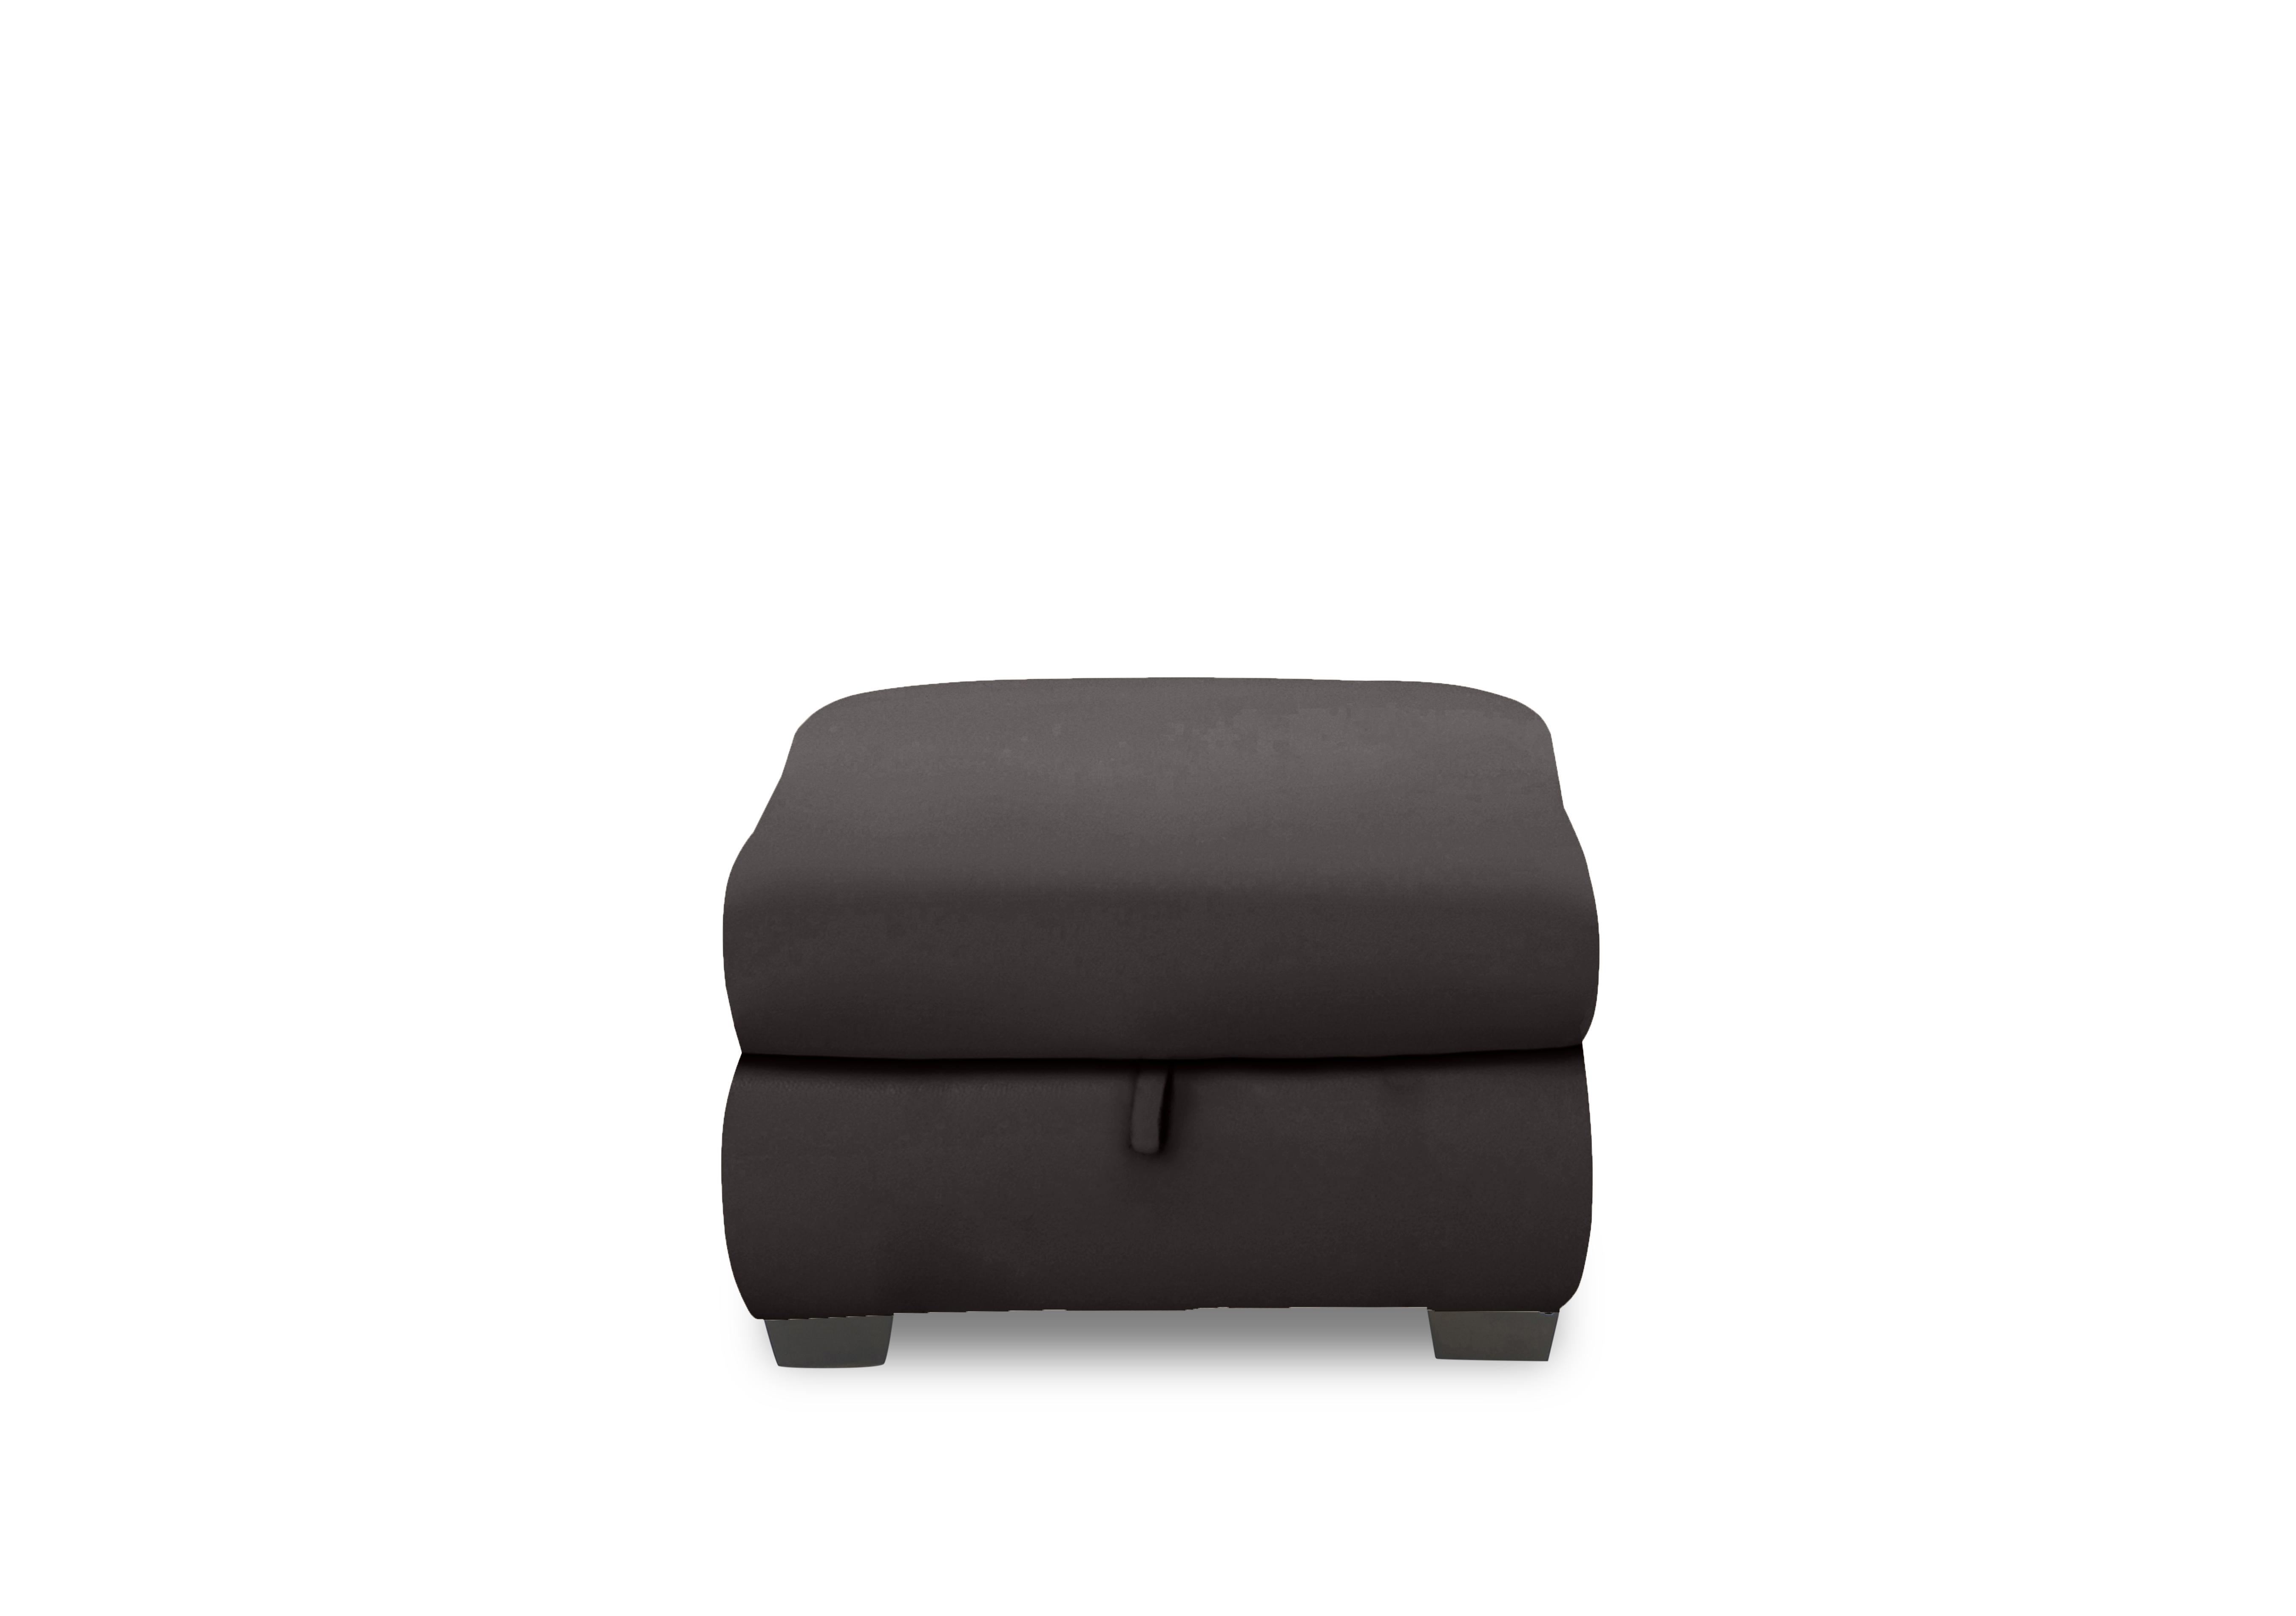 Nixon Leather Storage Footstool in An-727b Dark Brown on Furniture Village